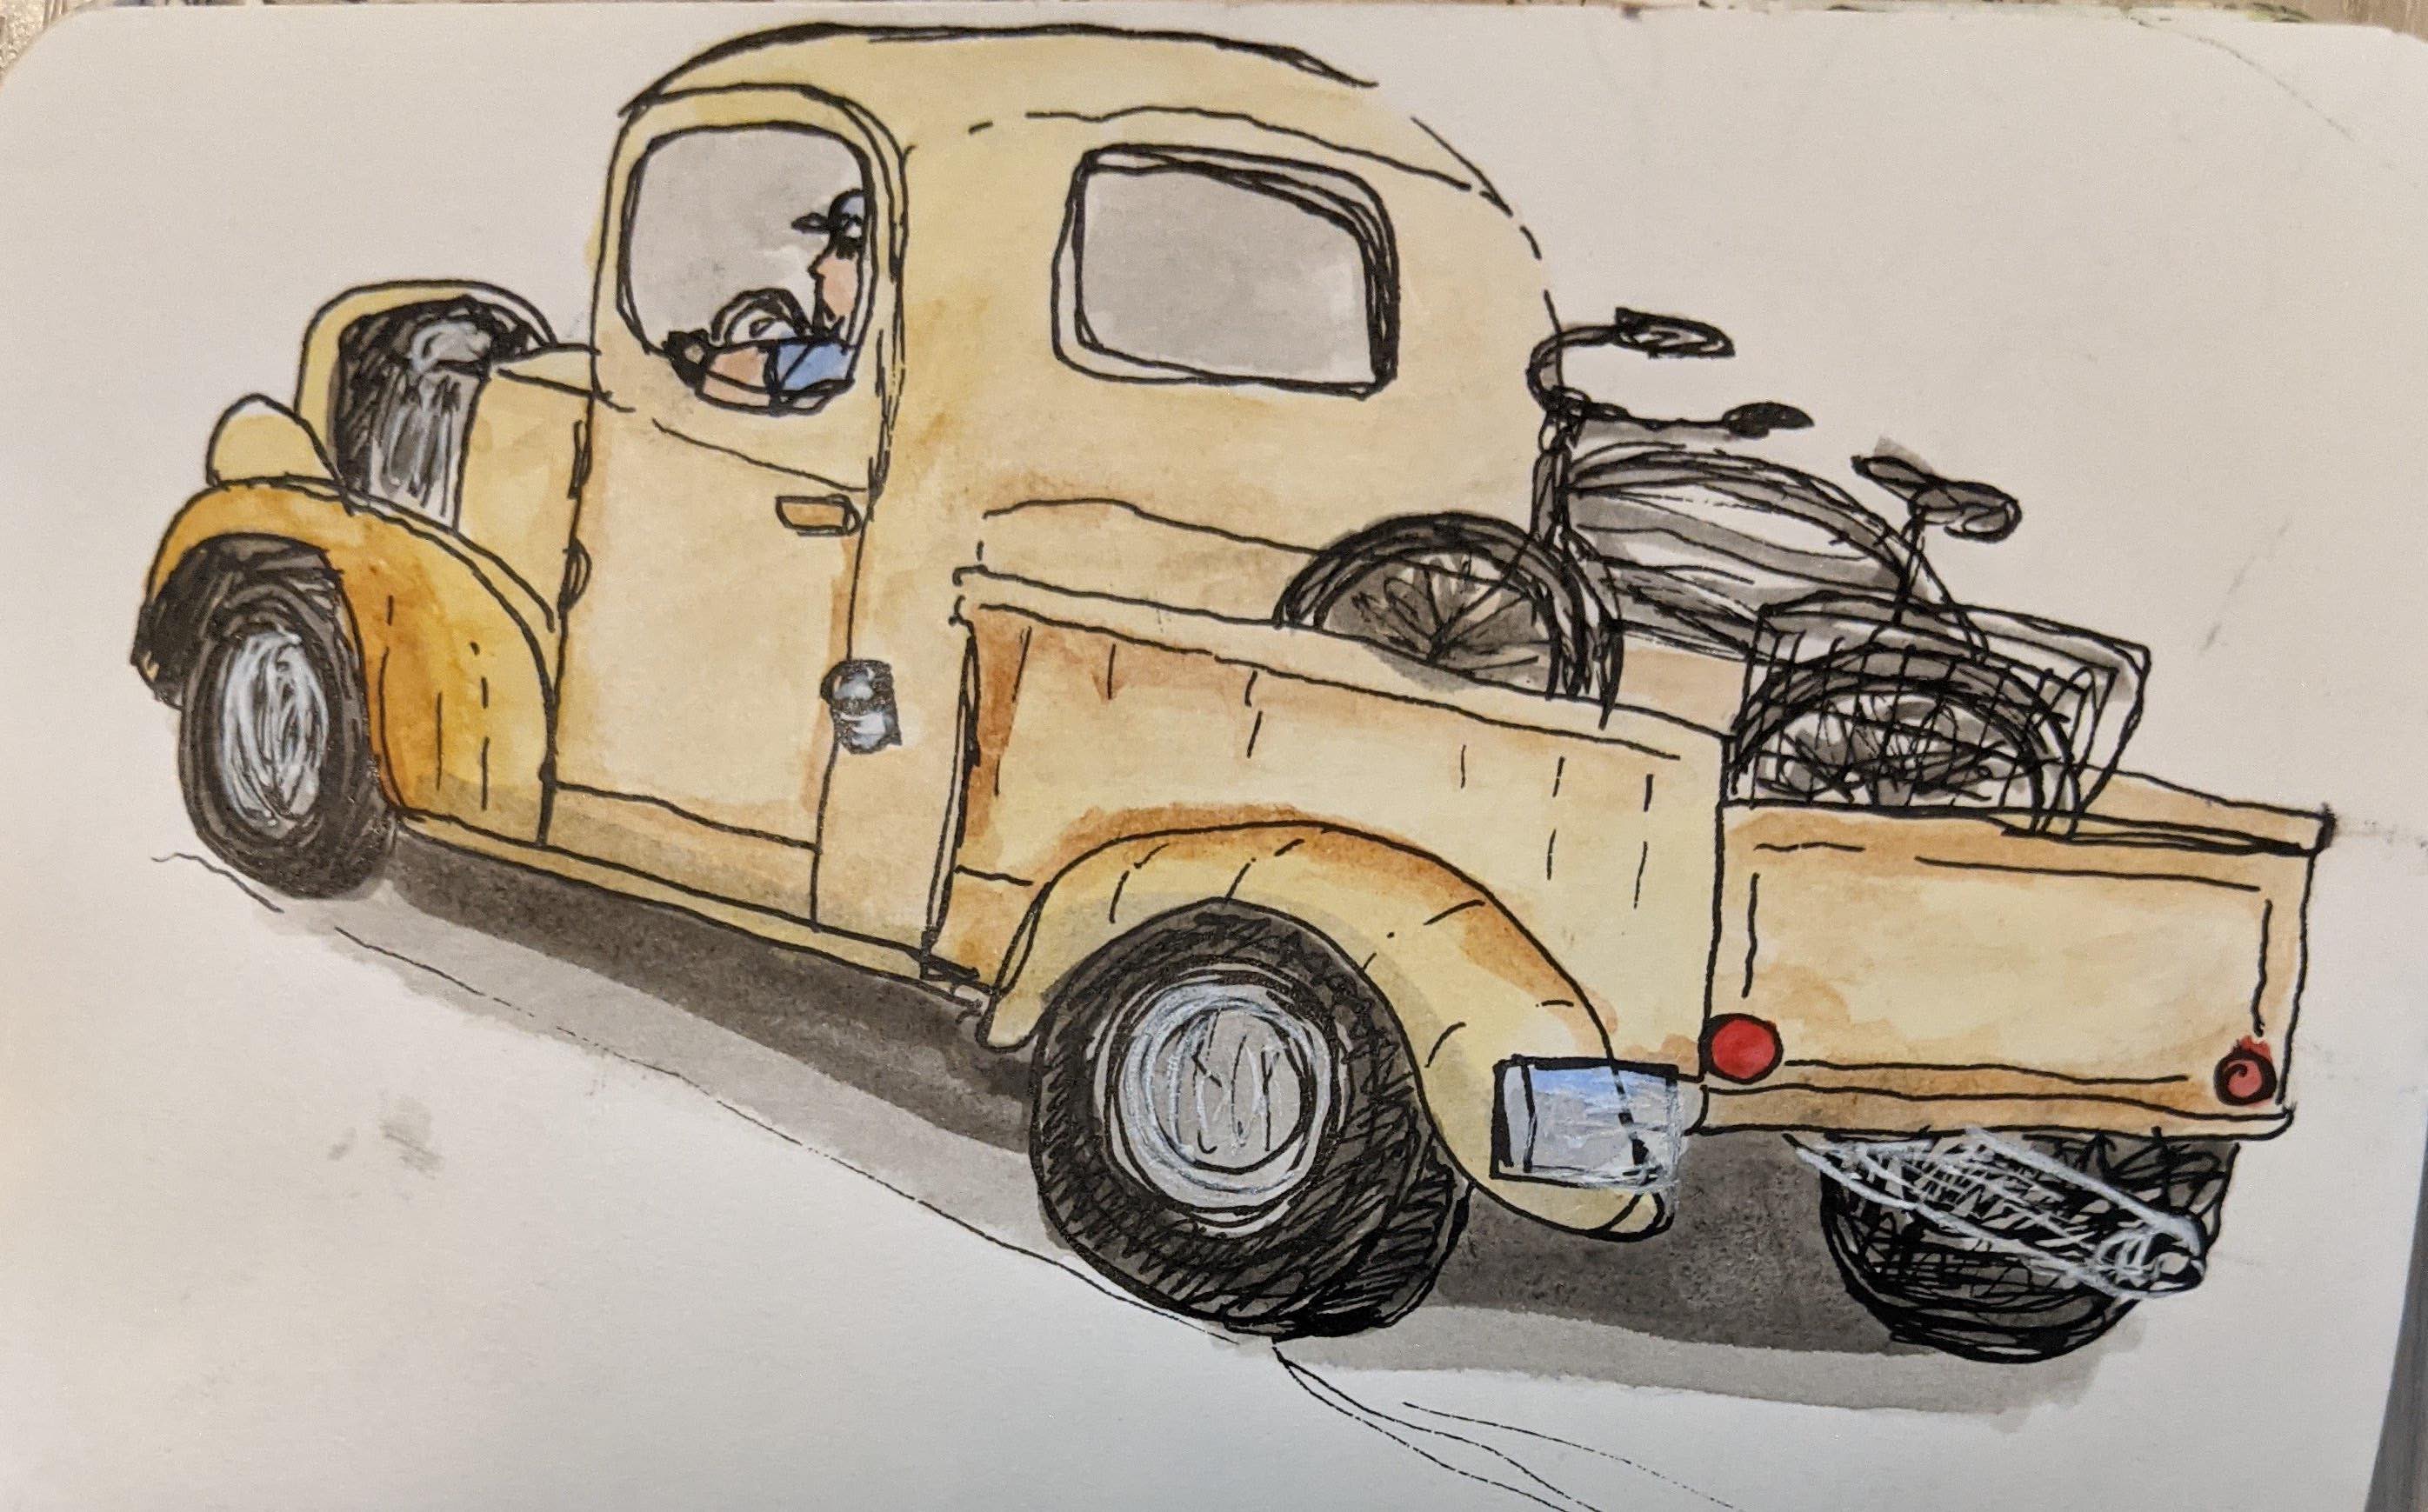 Sketch of classic truck